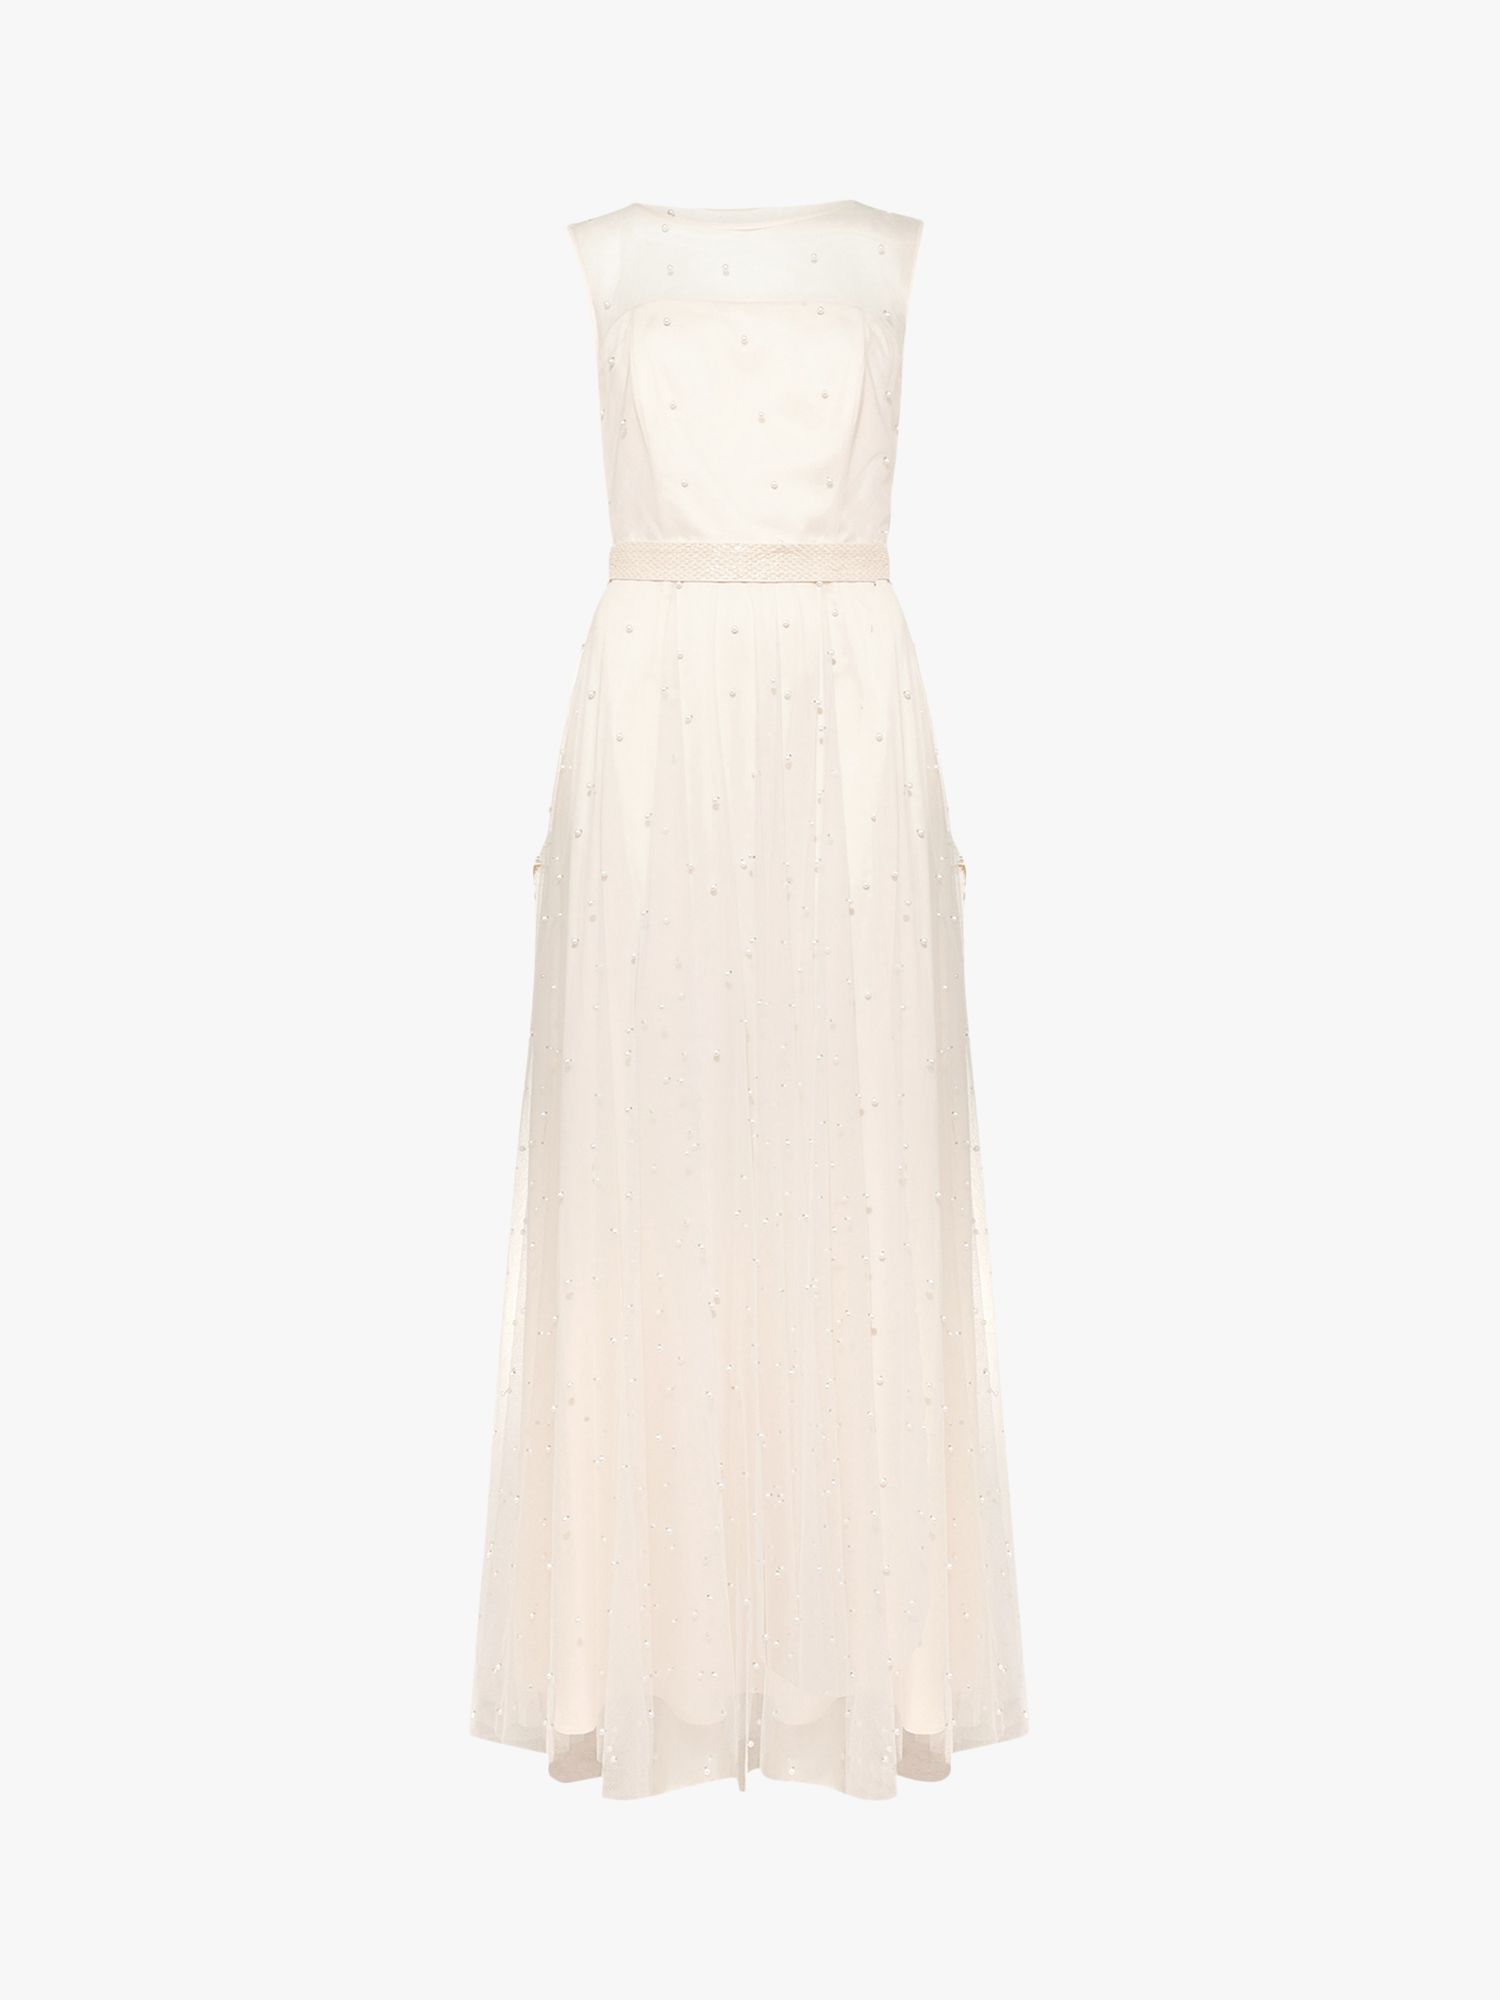 Buy Phase Eight Genova Tulle Wedding Dress, Old Rose Online at johnlewis.com